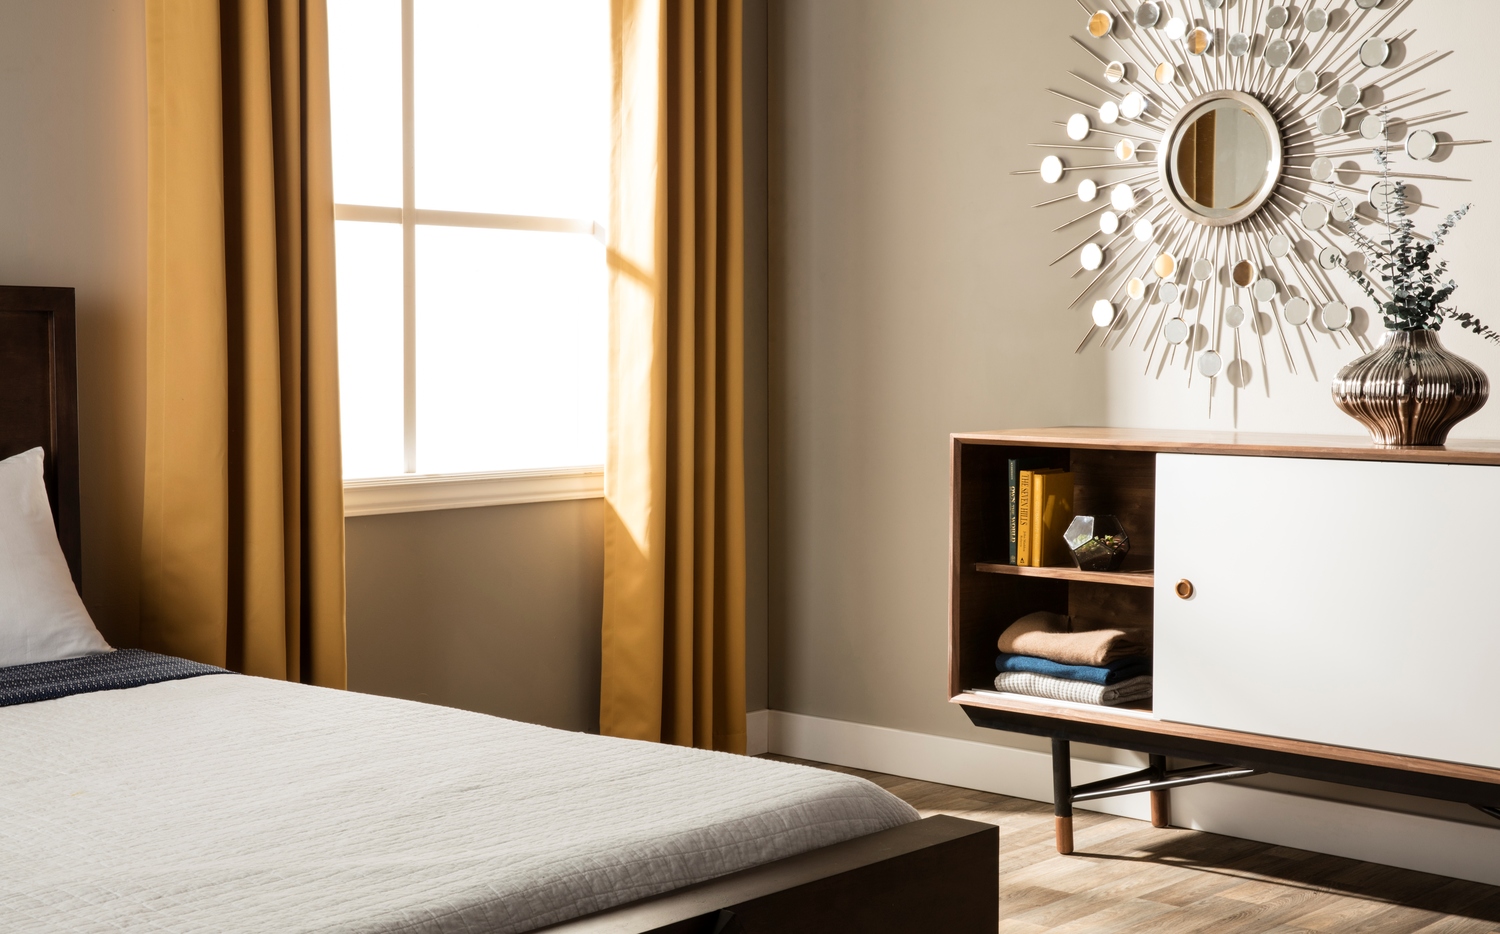 Mid-Century Style - Minimalist Bedroom Decor Ideas